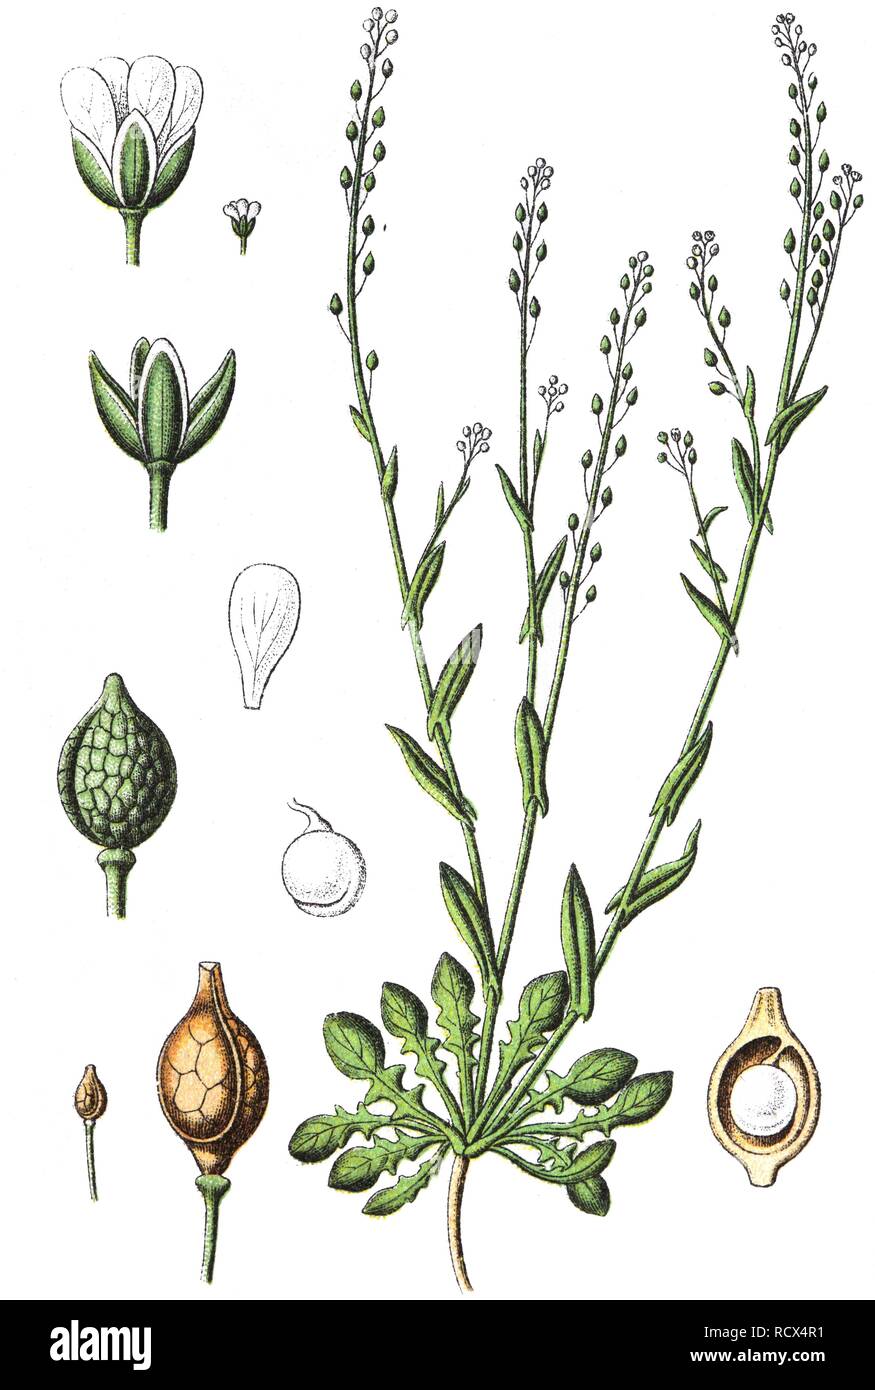 Calepina (Calepina irregularis), medicinal and useful plants, chromolithography, 1880 Stock Photo